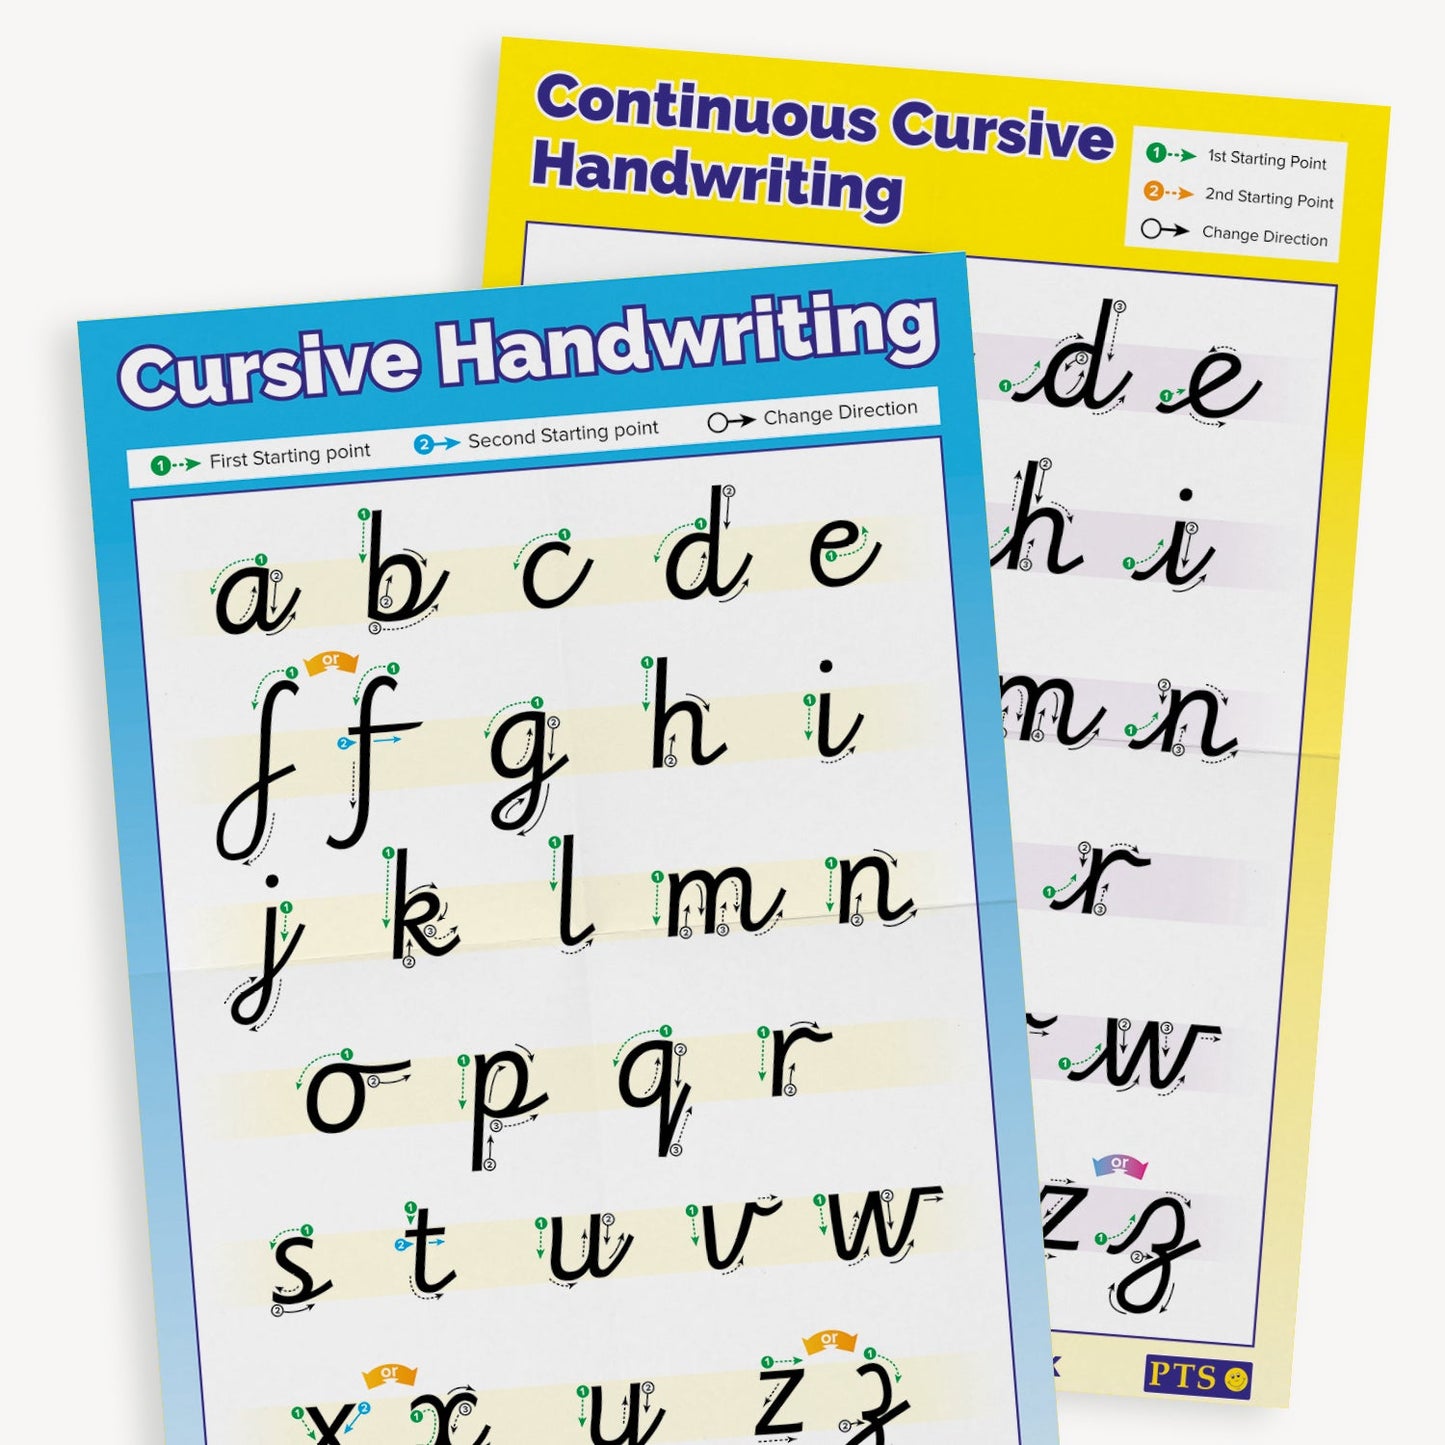 Cursive Handwriting Poster - A2